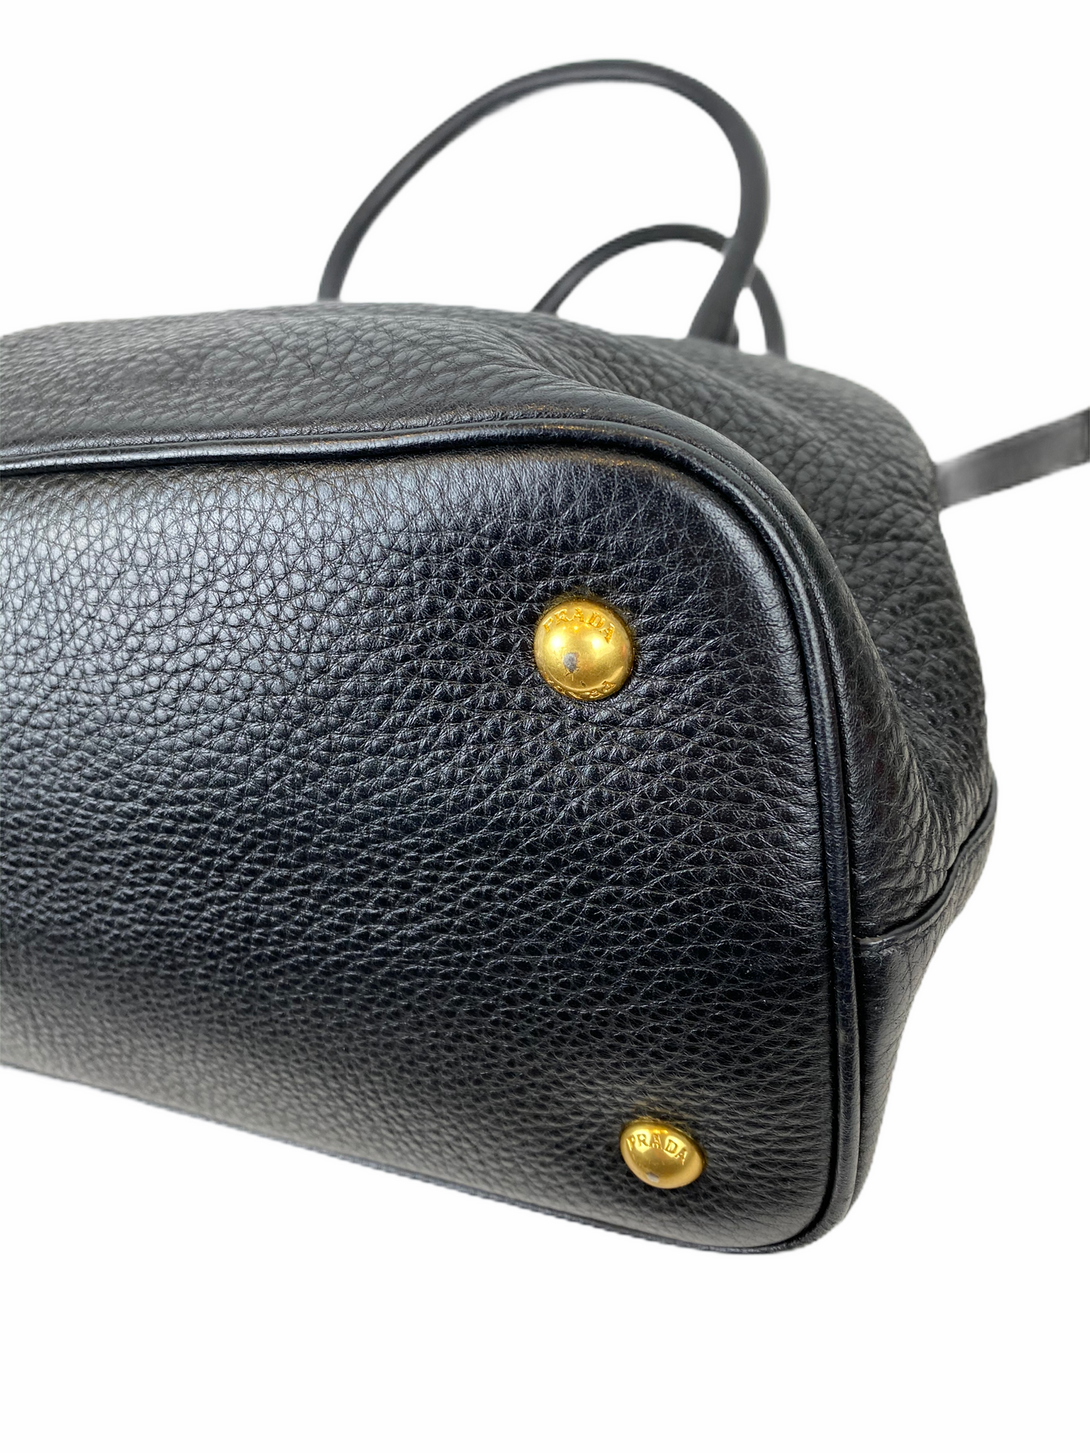 Prada Pebbled Black Leather Shoulder Bag - As Seen on Instagram 30/08/2020 - Siopaella Designer Exchange